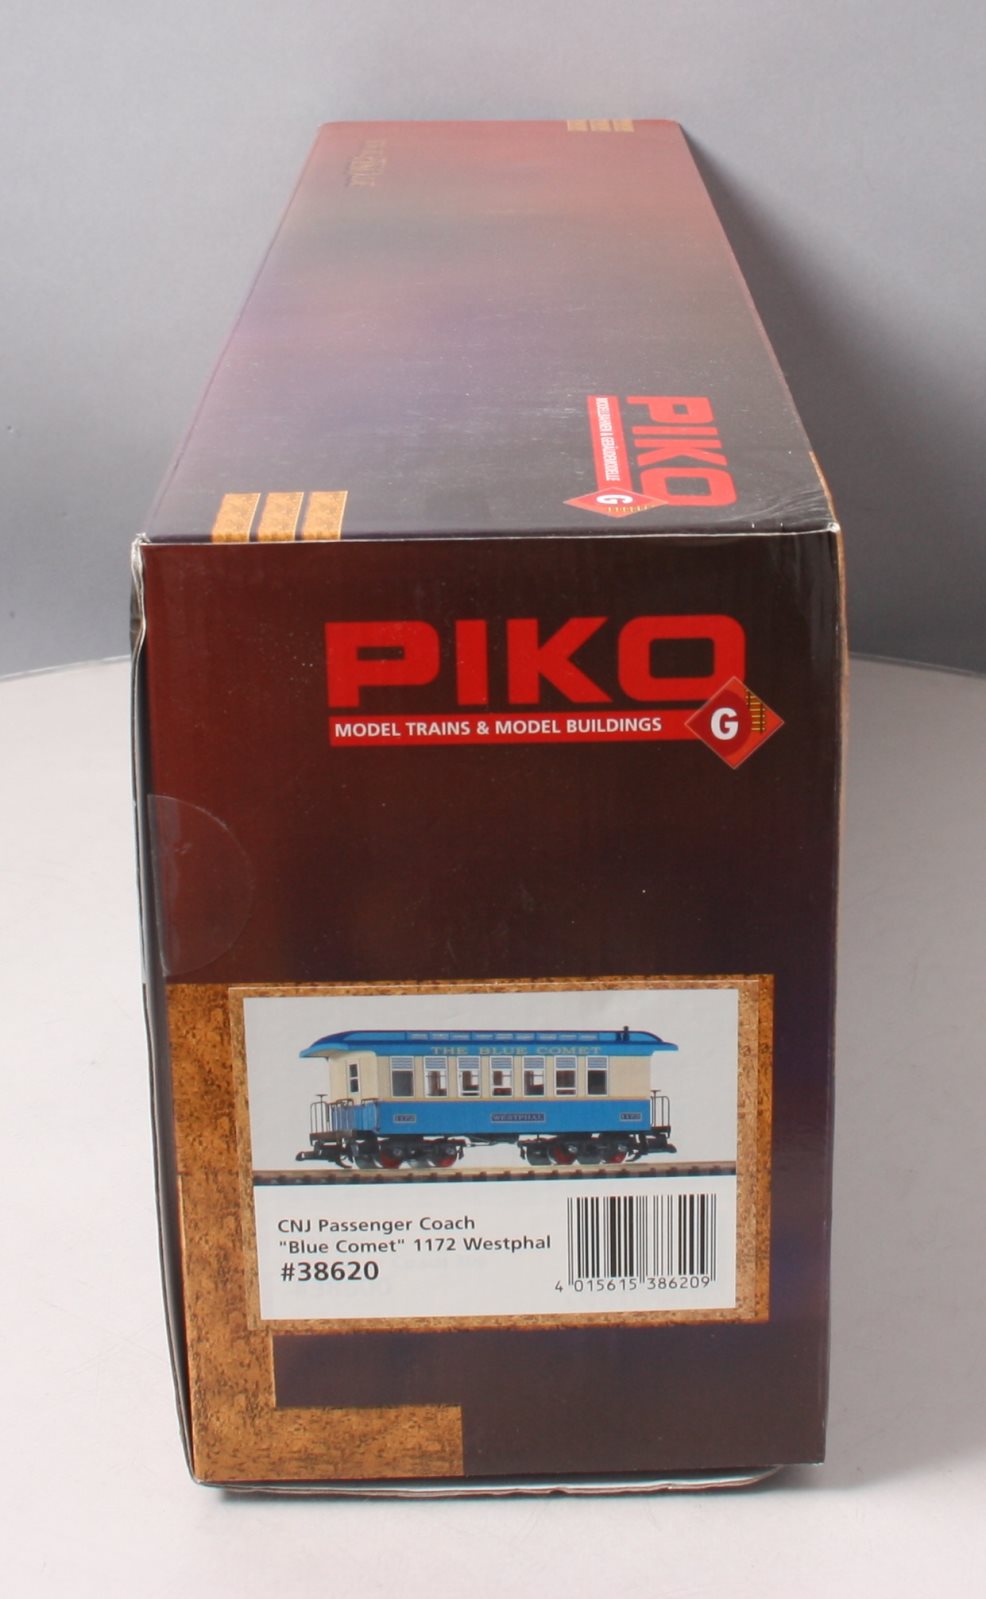 Piko 38620 G Blue Comet Wood Coach #1172